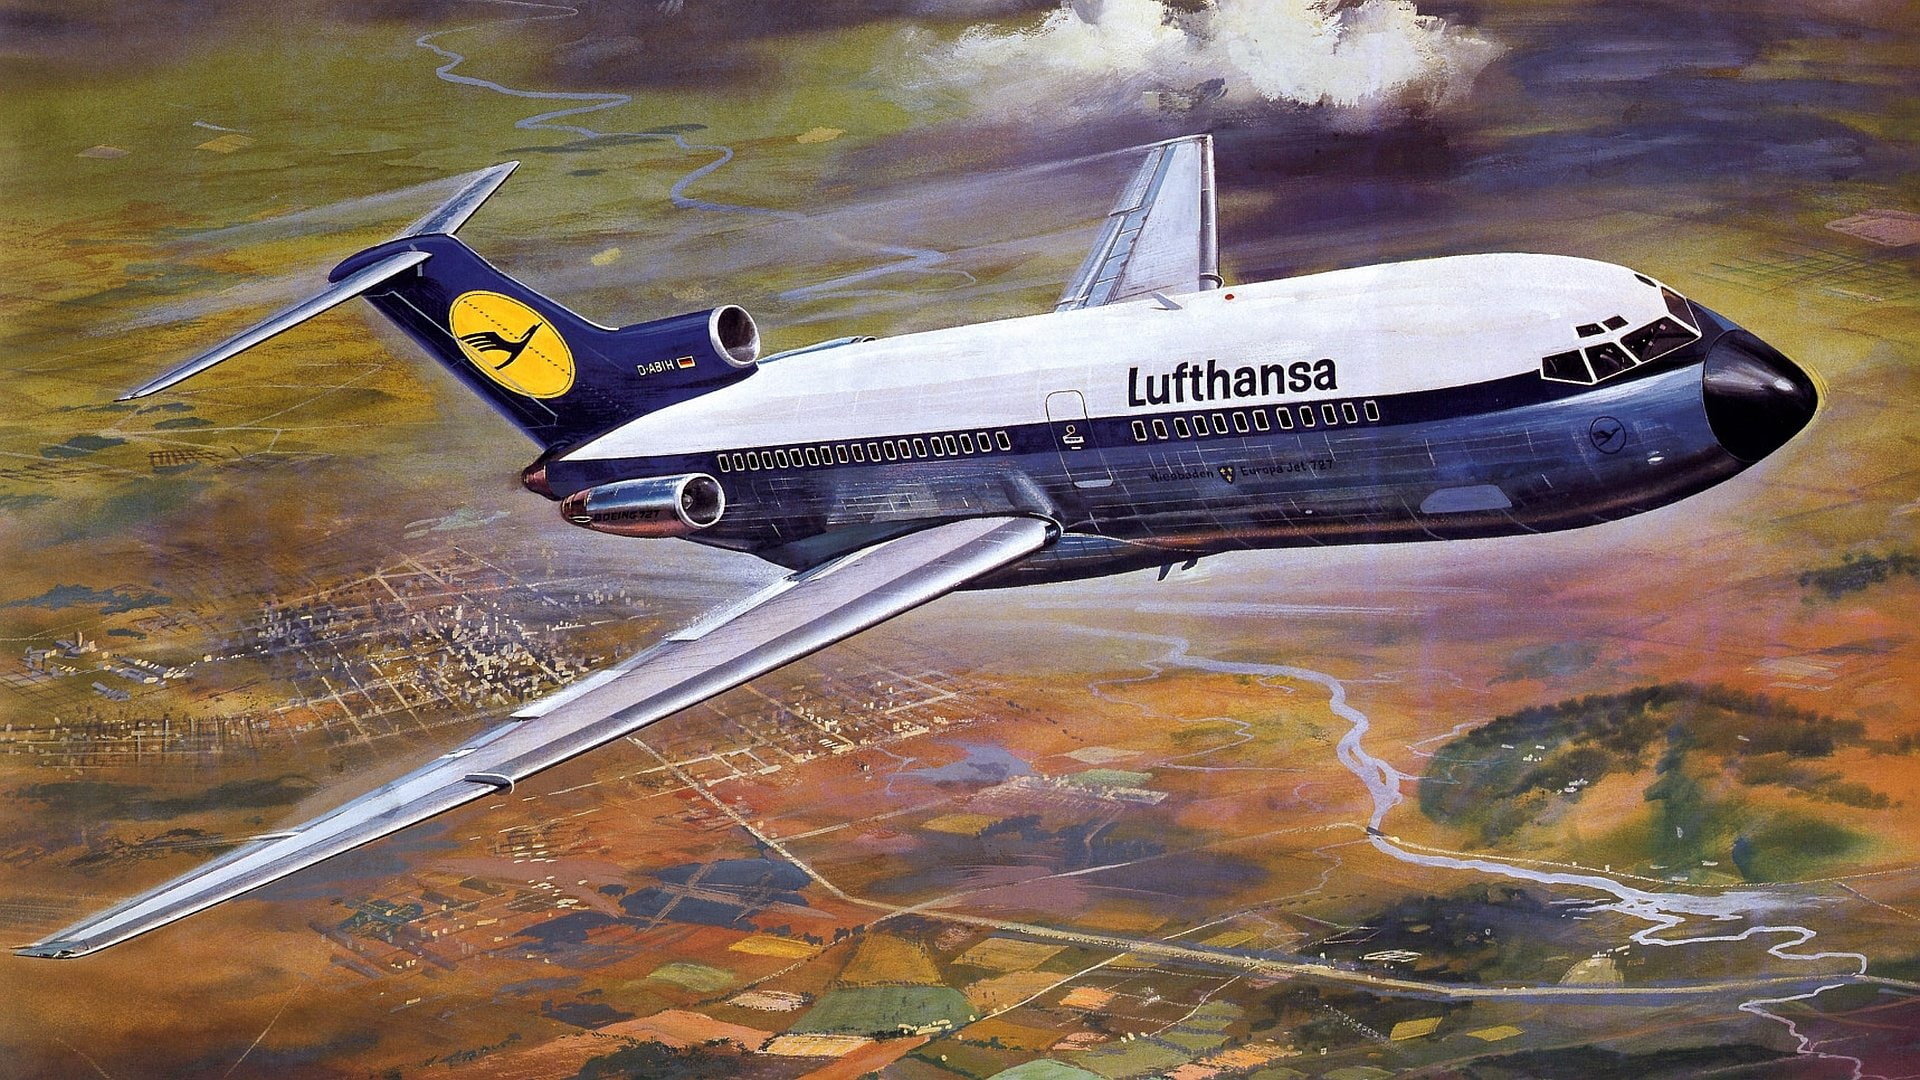 Aircrafts, Boeing 727, Airplane, Lufthansa, air vehicle, transportation